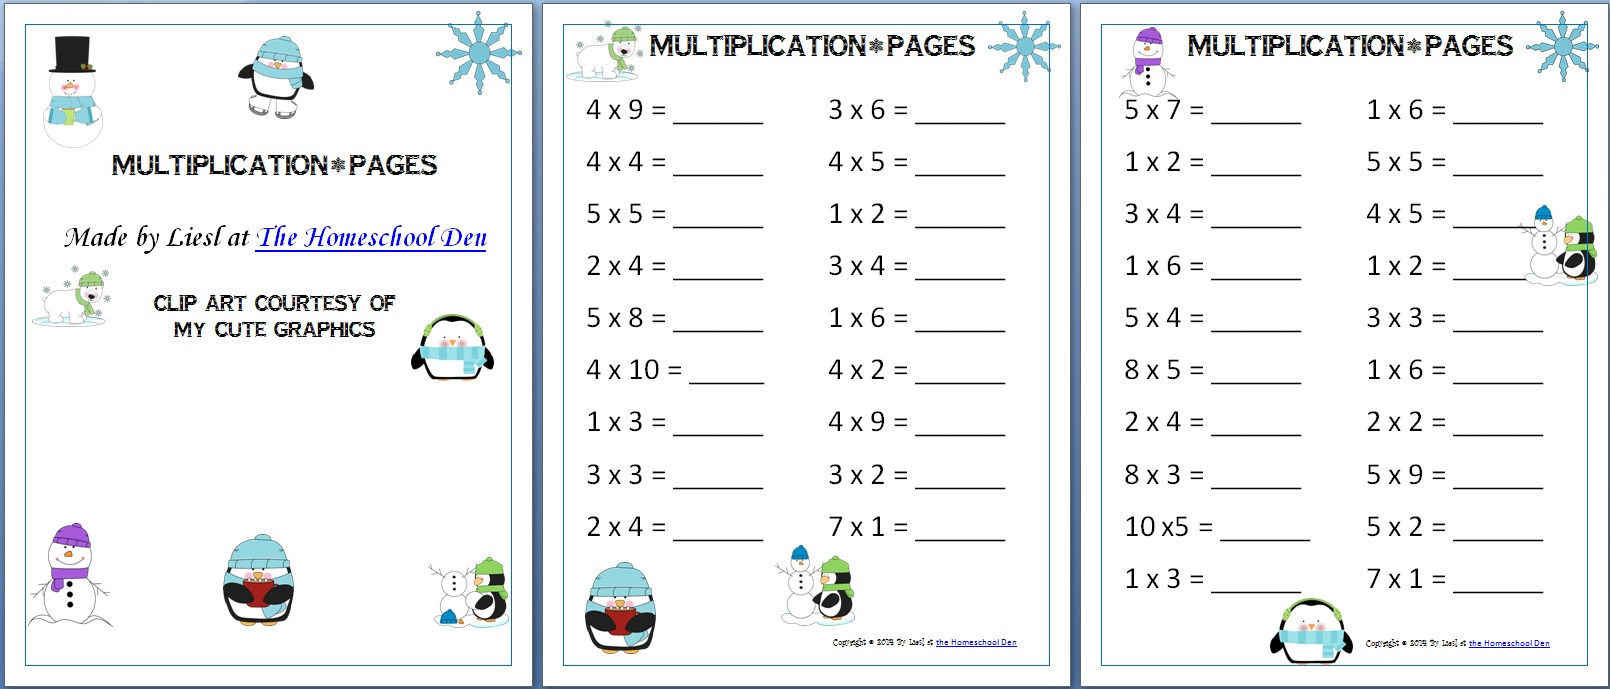 Free Multiplication Worksheets Archives - Homeschool Den with Multiplication Worksheets Homeschool